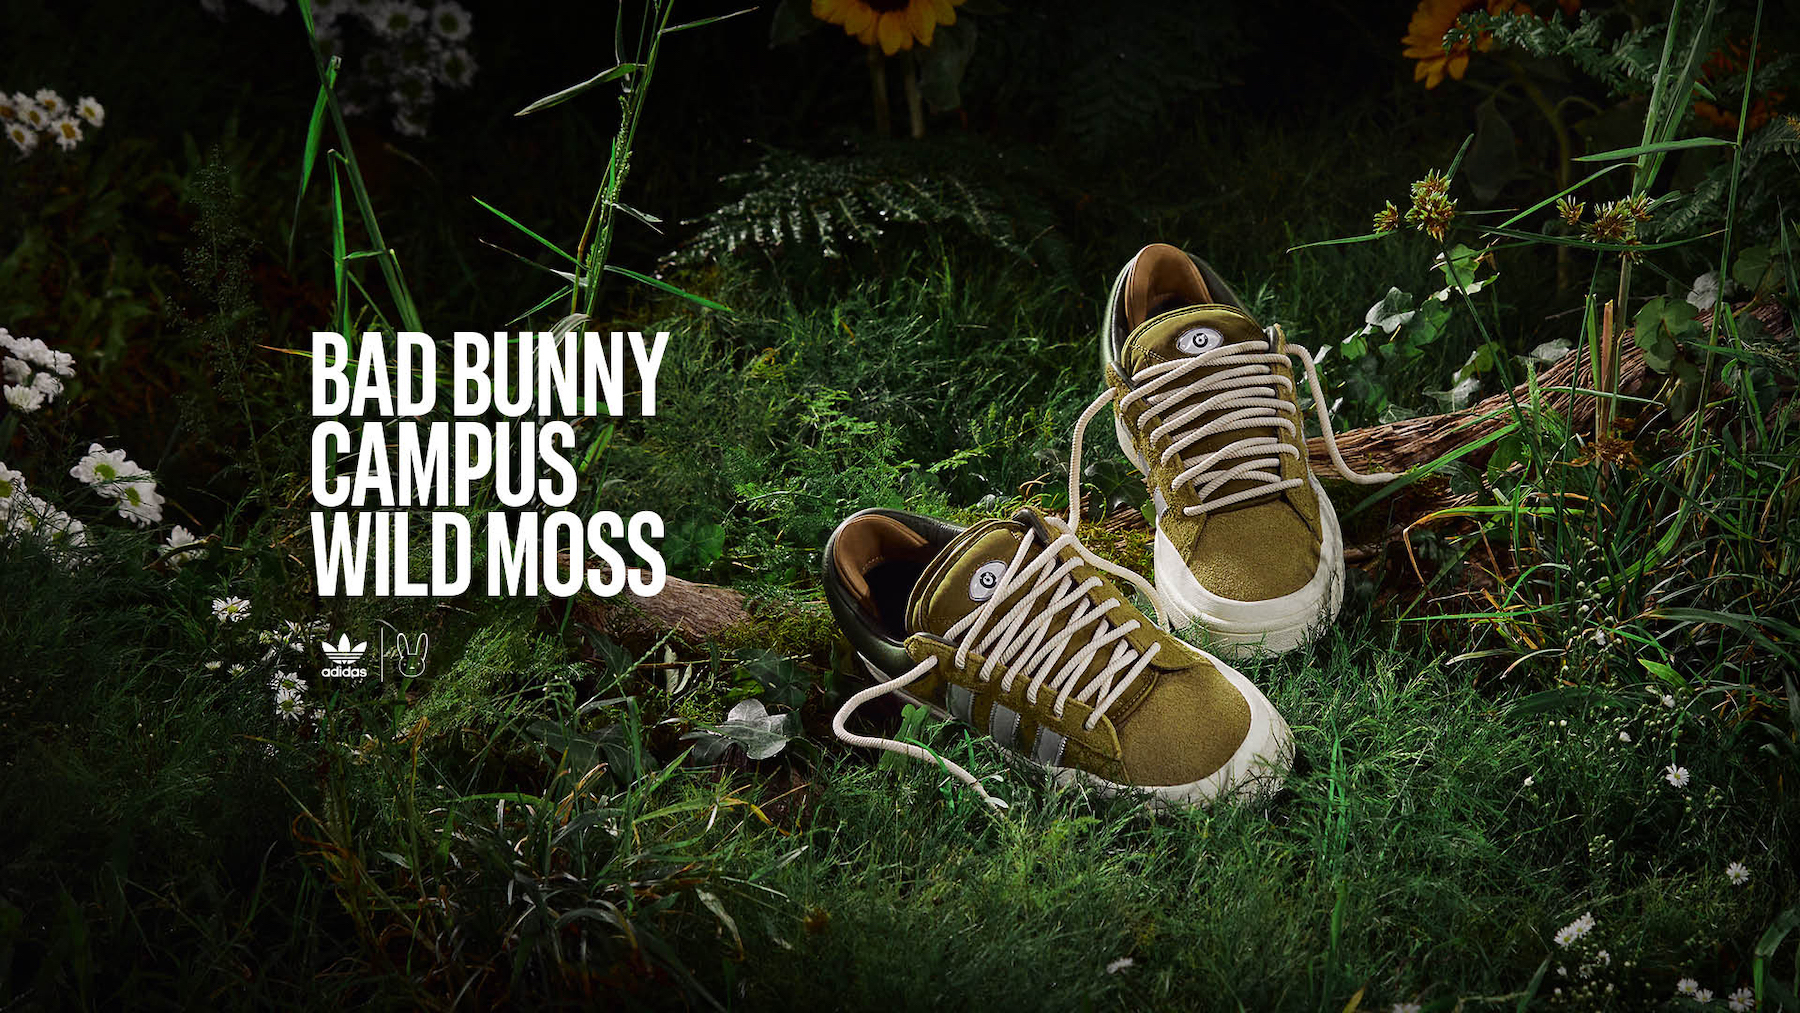 Leo un libro Aislar mármol Bad Bunny and adidas Set to Drop a Coachella Shoe – The Campus Wild Moss